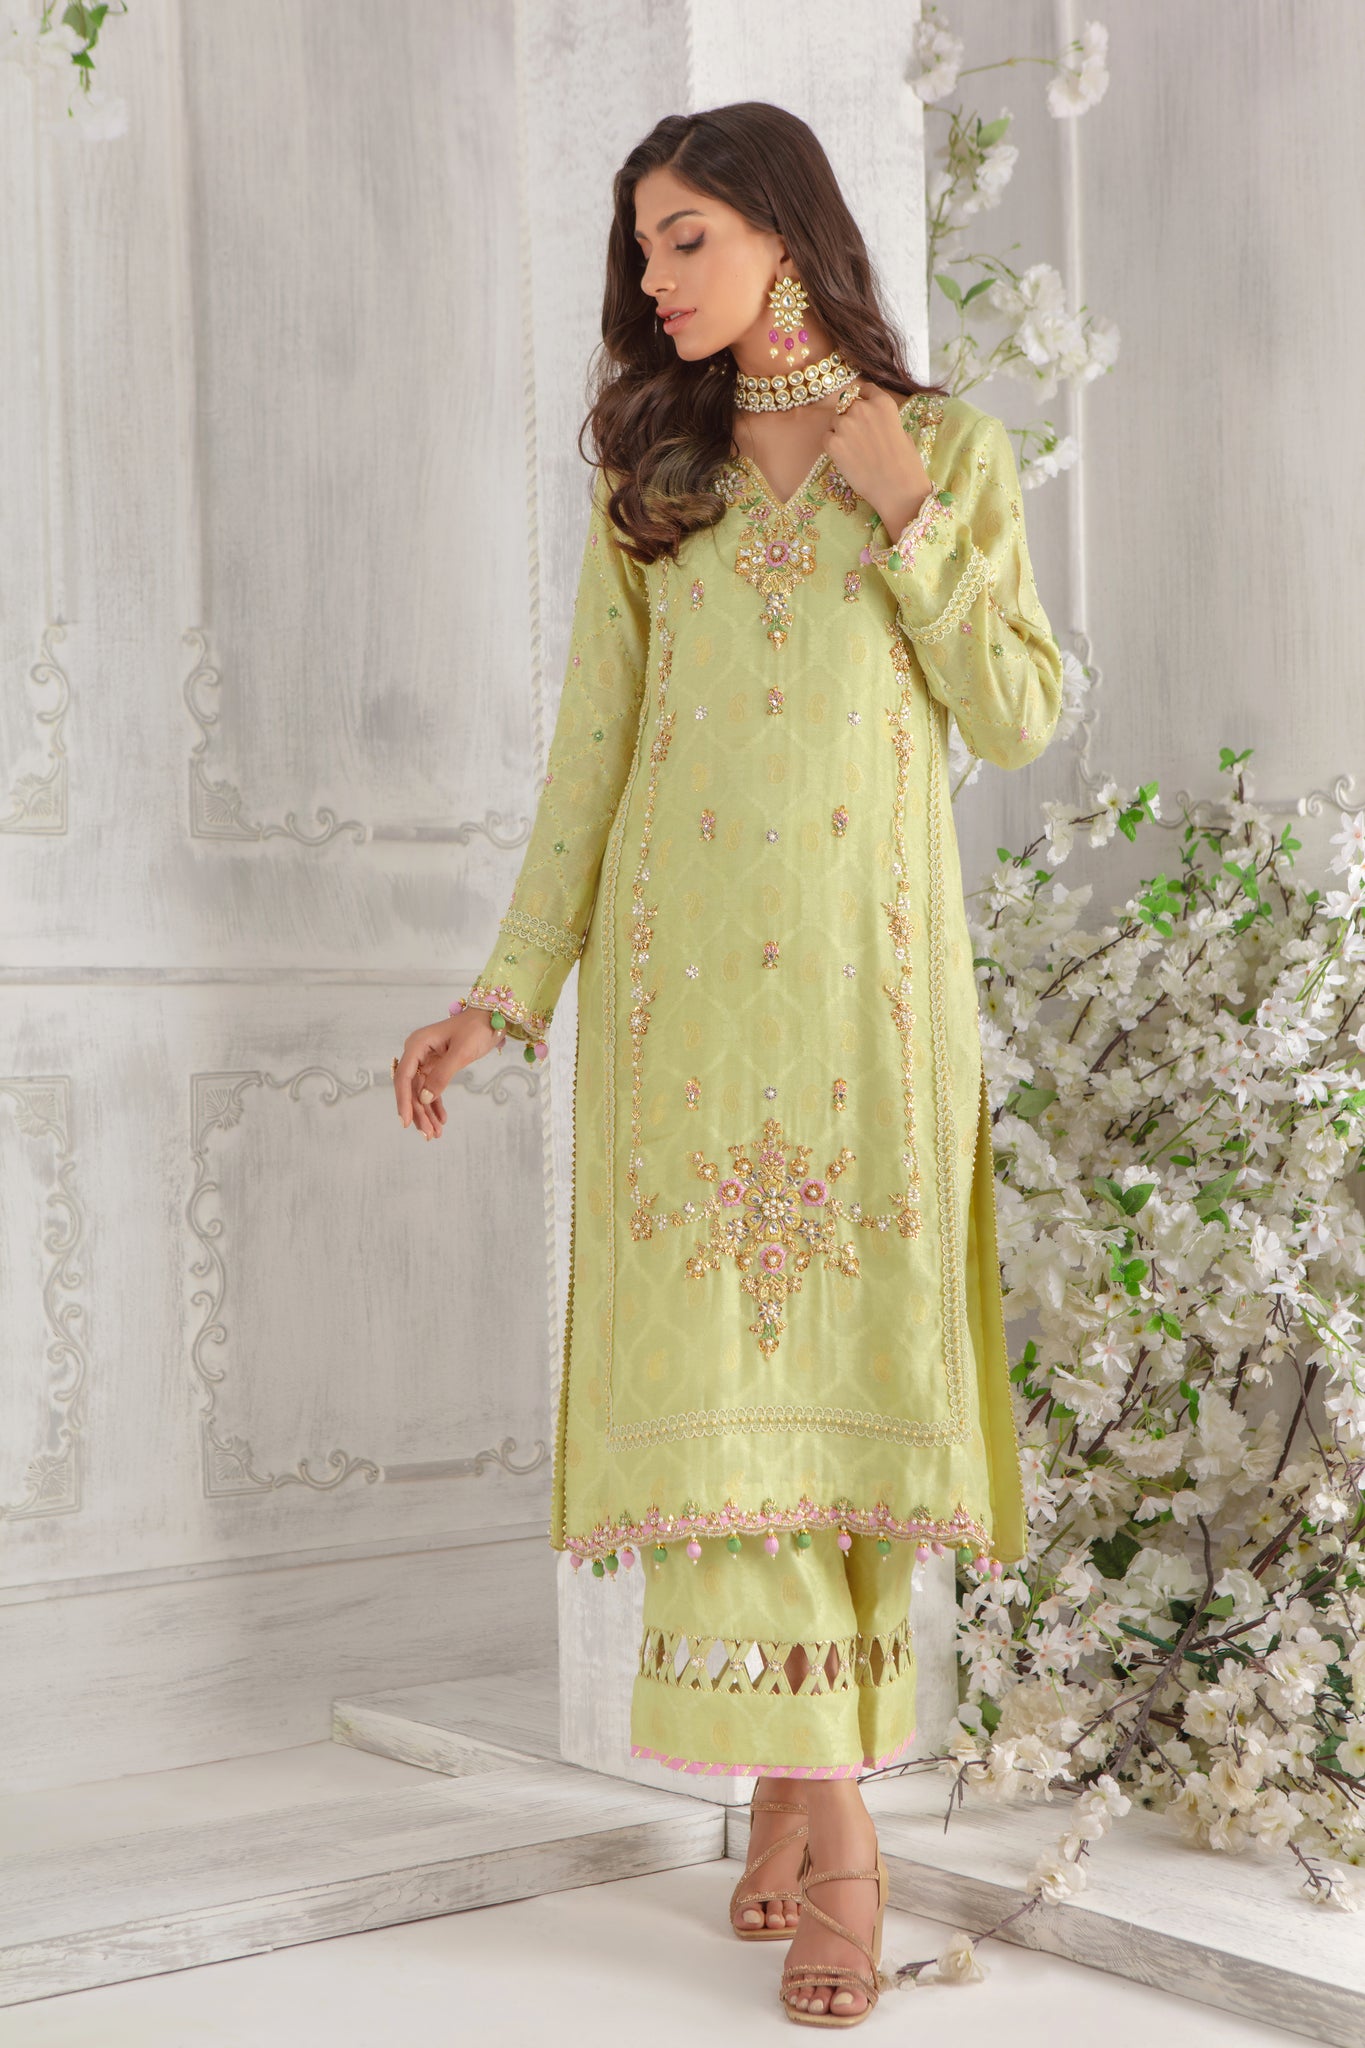 Livia | Pakistani Designer Outfit | Sarosh Salman